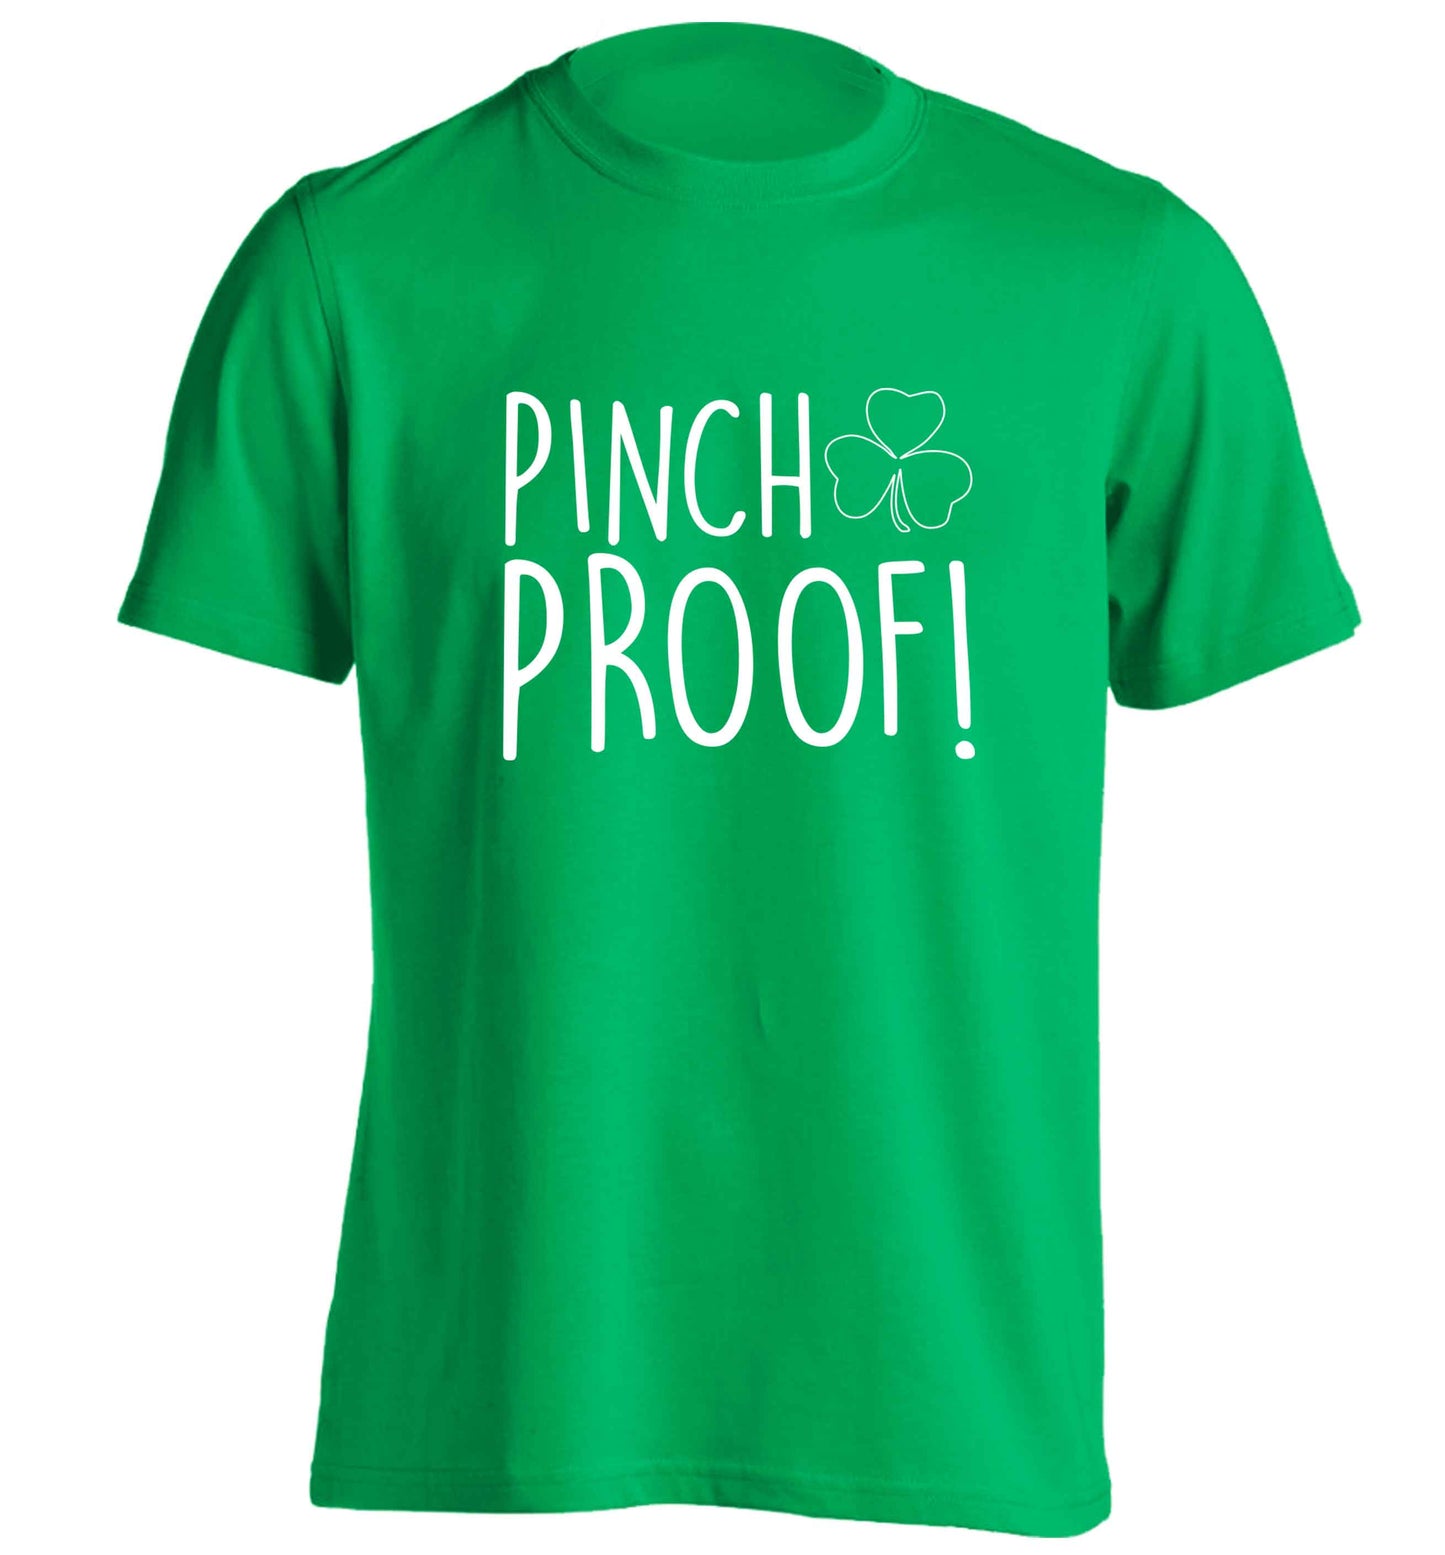 Pinch Proof adults unisex green Tshirt 2XL